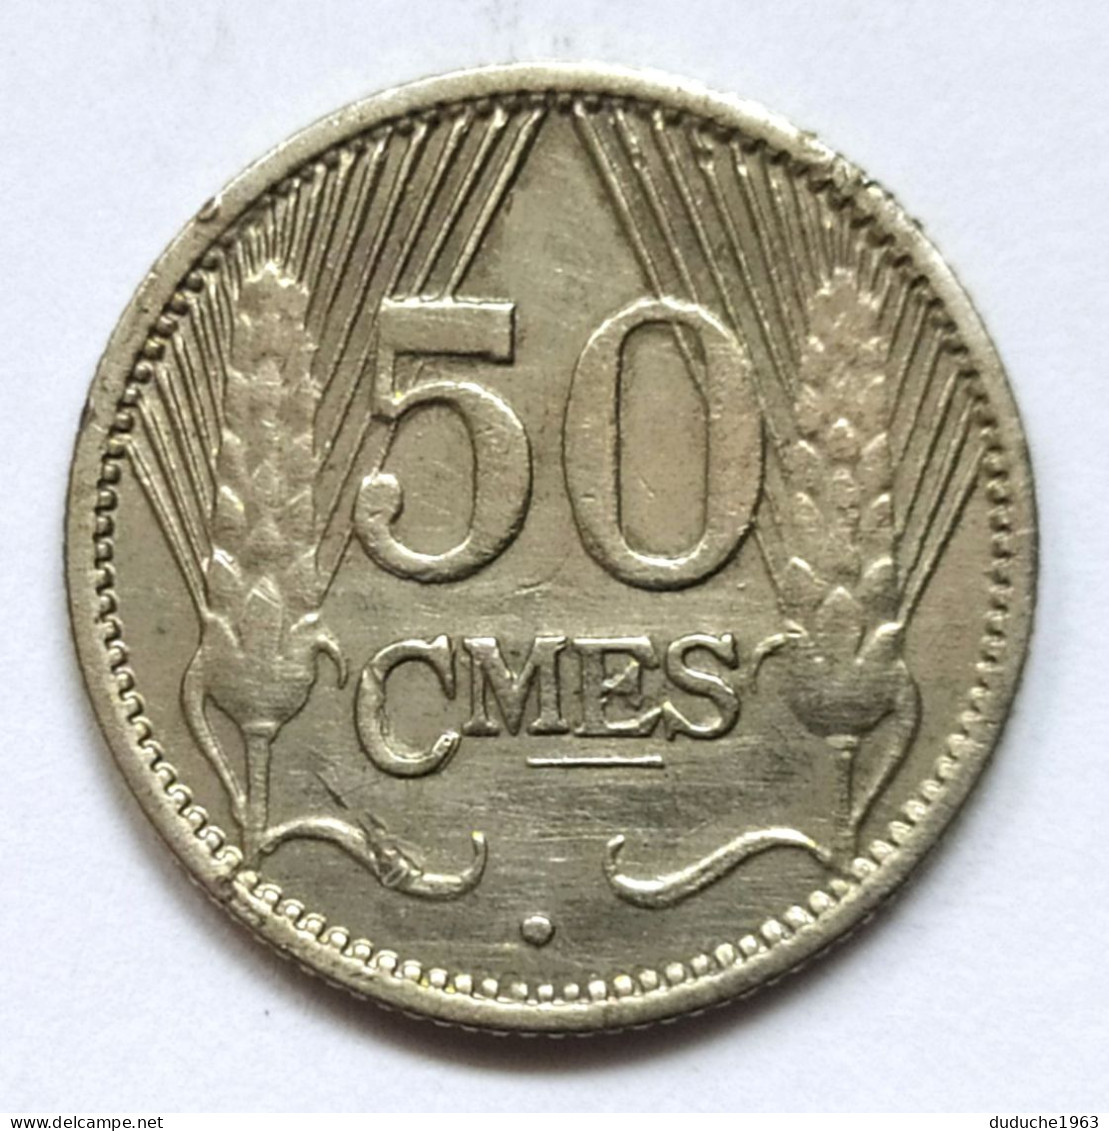 Luxembourg - 50 Centimes 1930 - Lussemburgo